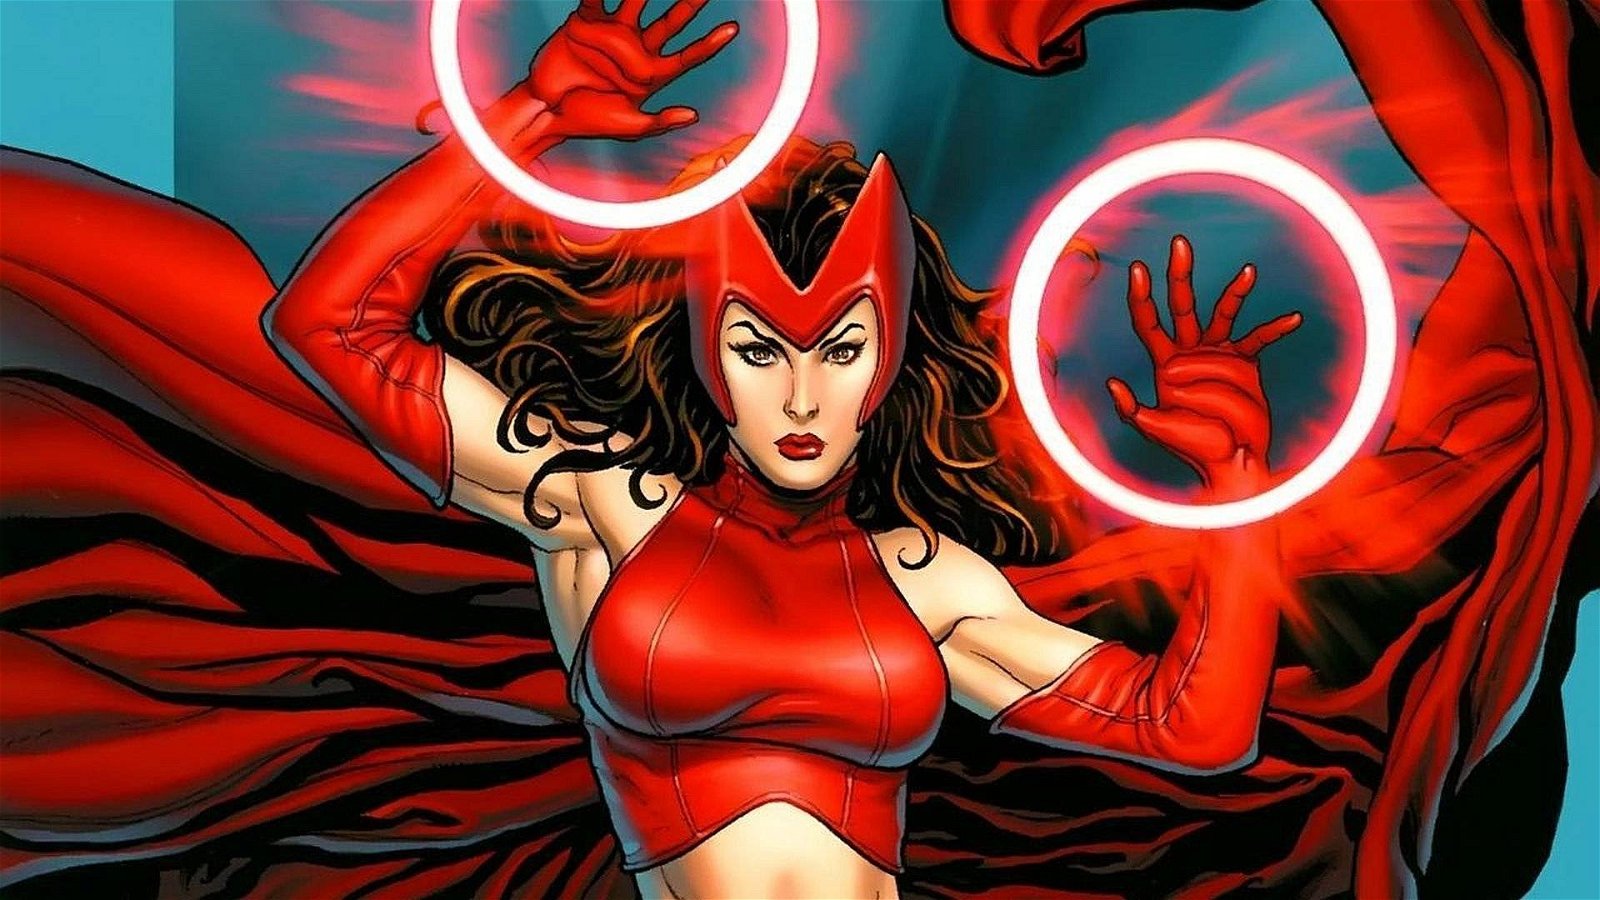 Immagine di Scarlet Witch: genesi, storia e caratteristiche di Wanda, una “minaccia“ di livello Omega